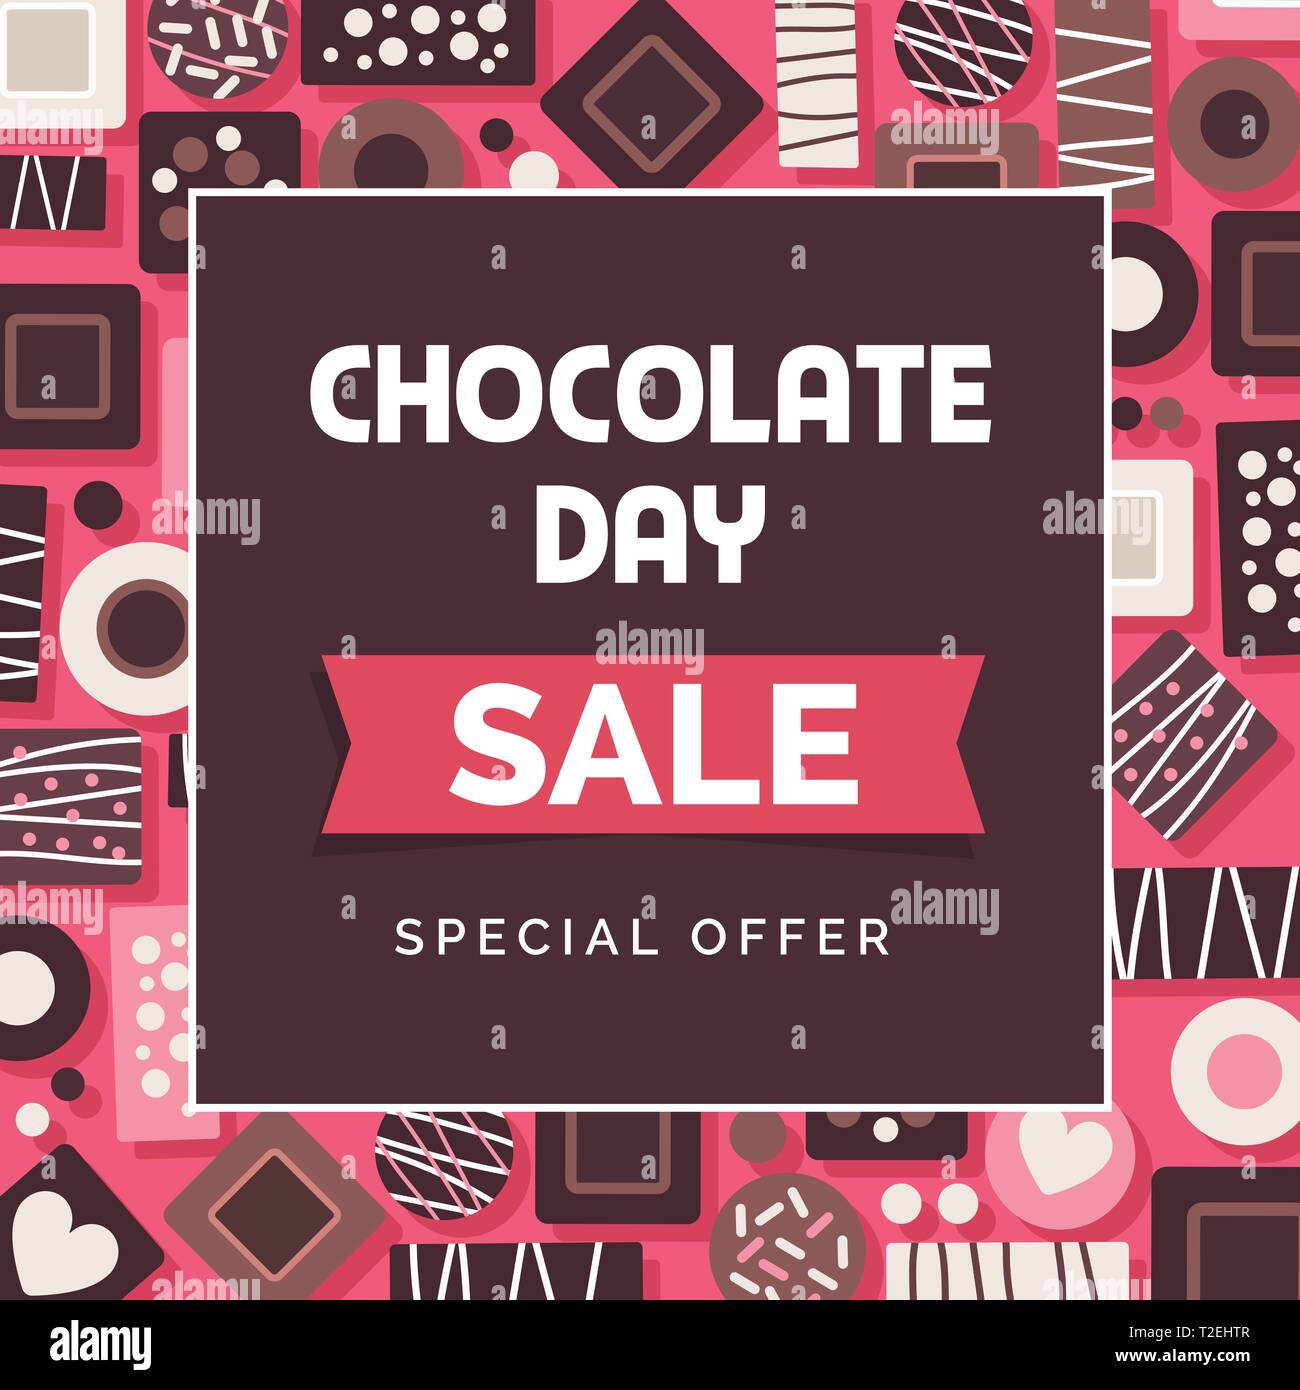 Schokolade tag Werbemittel Verkauf social media Post mit Auswahl an leckeren Pralinen Stock Vektor